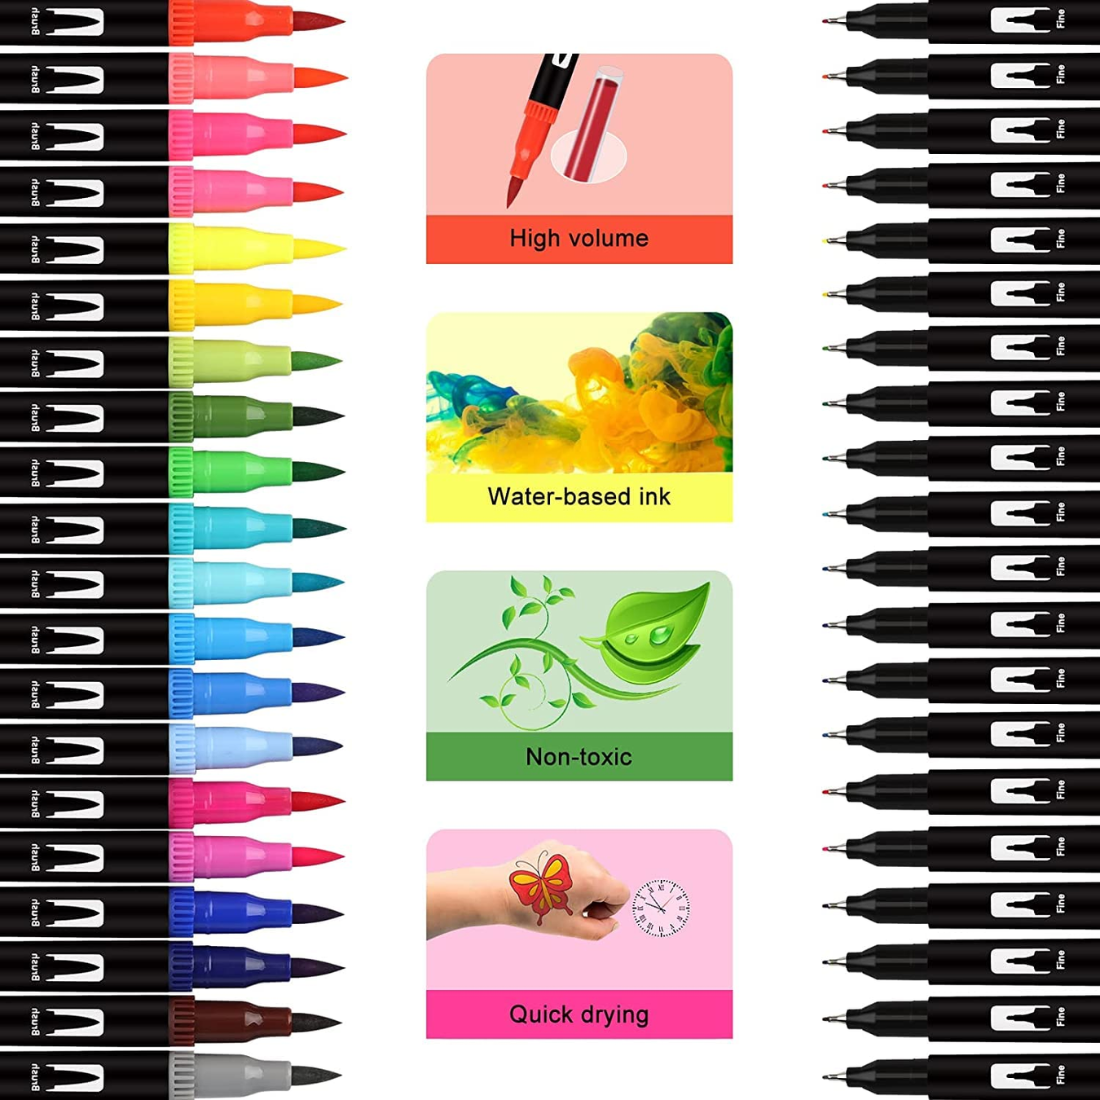 Oytra Brush Pen Set 48 Water Color Brush Pens with Flexible Fiber